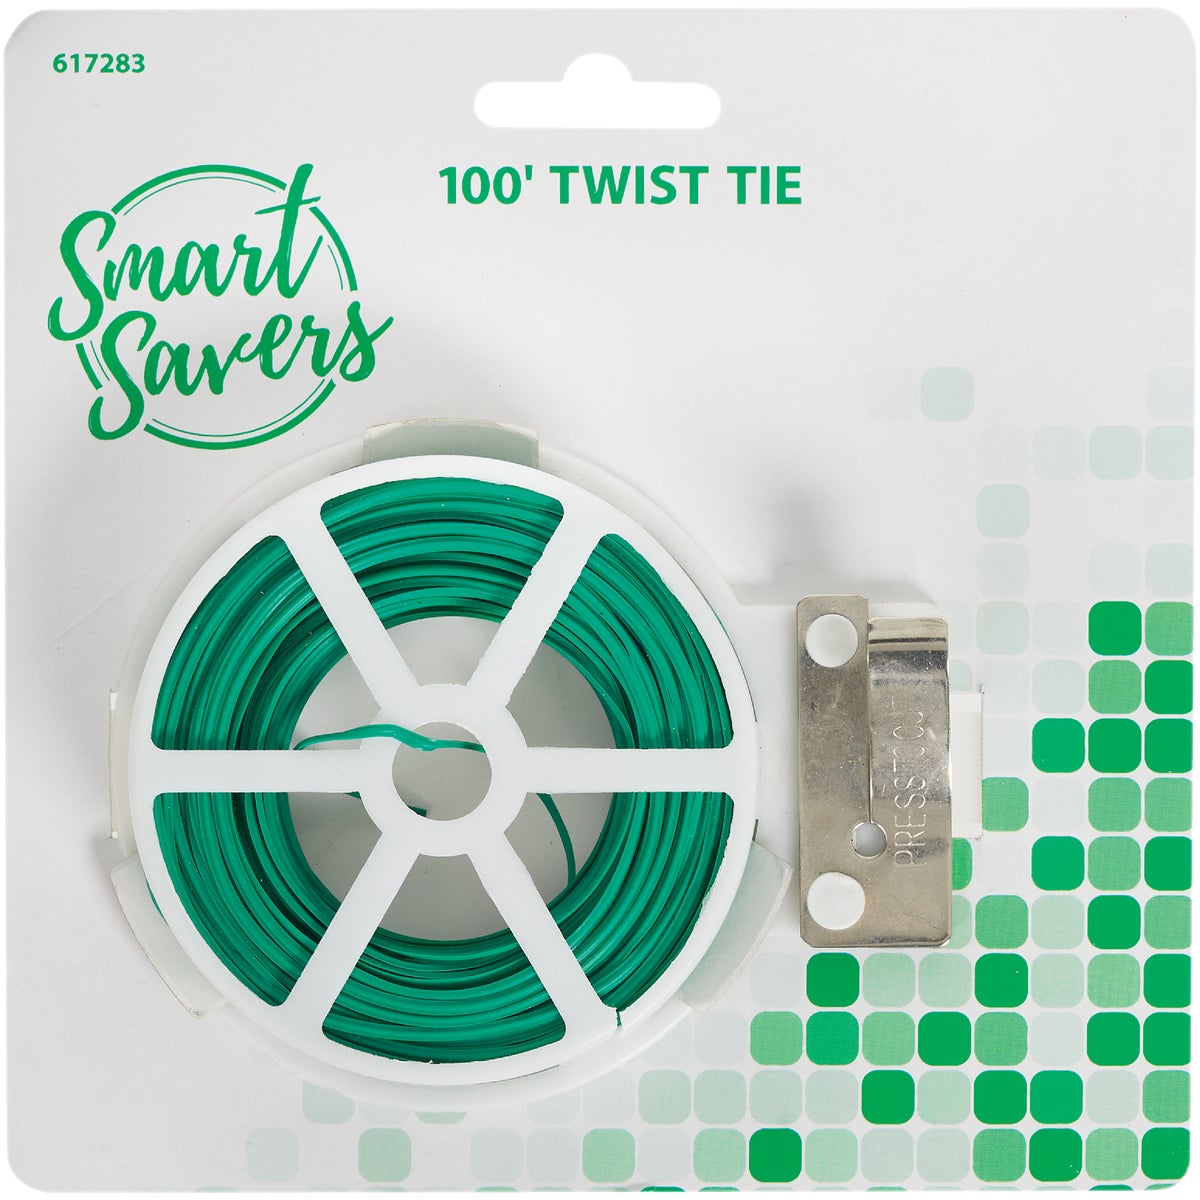 Item 617283, Smart Savers green rubber twist tie. 100-foot roll.